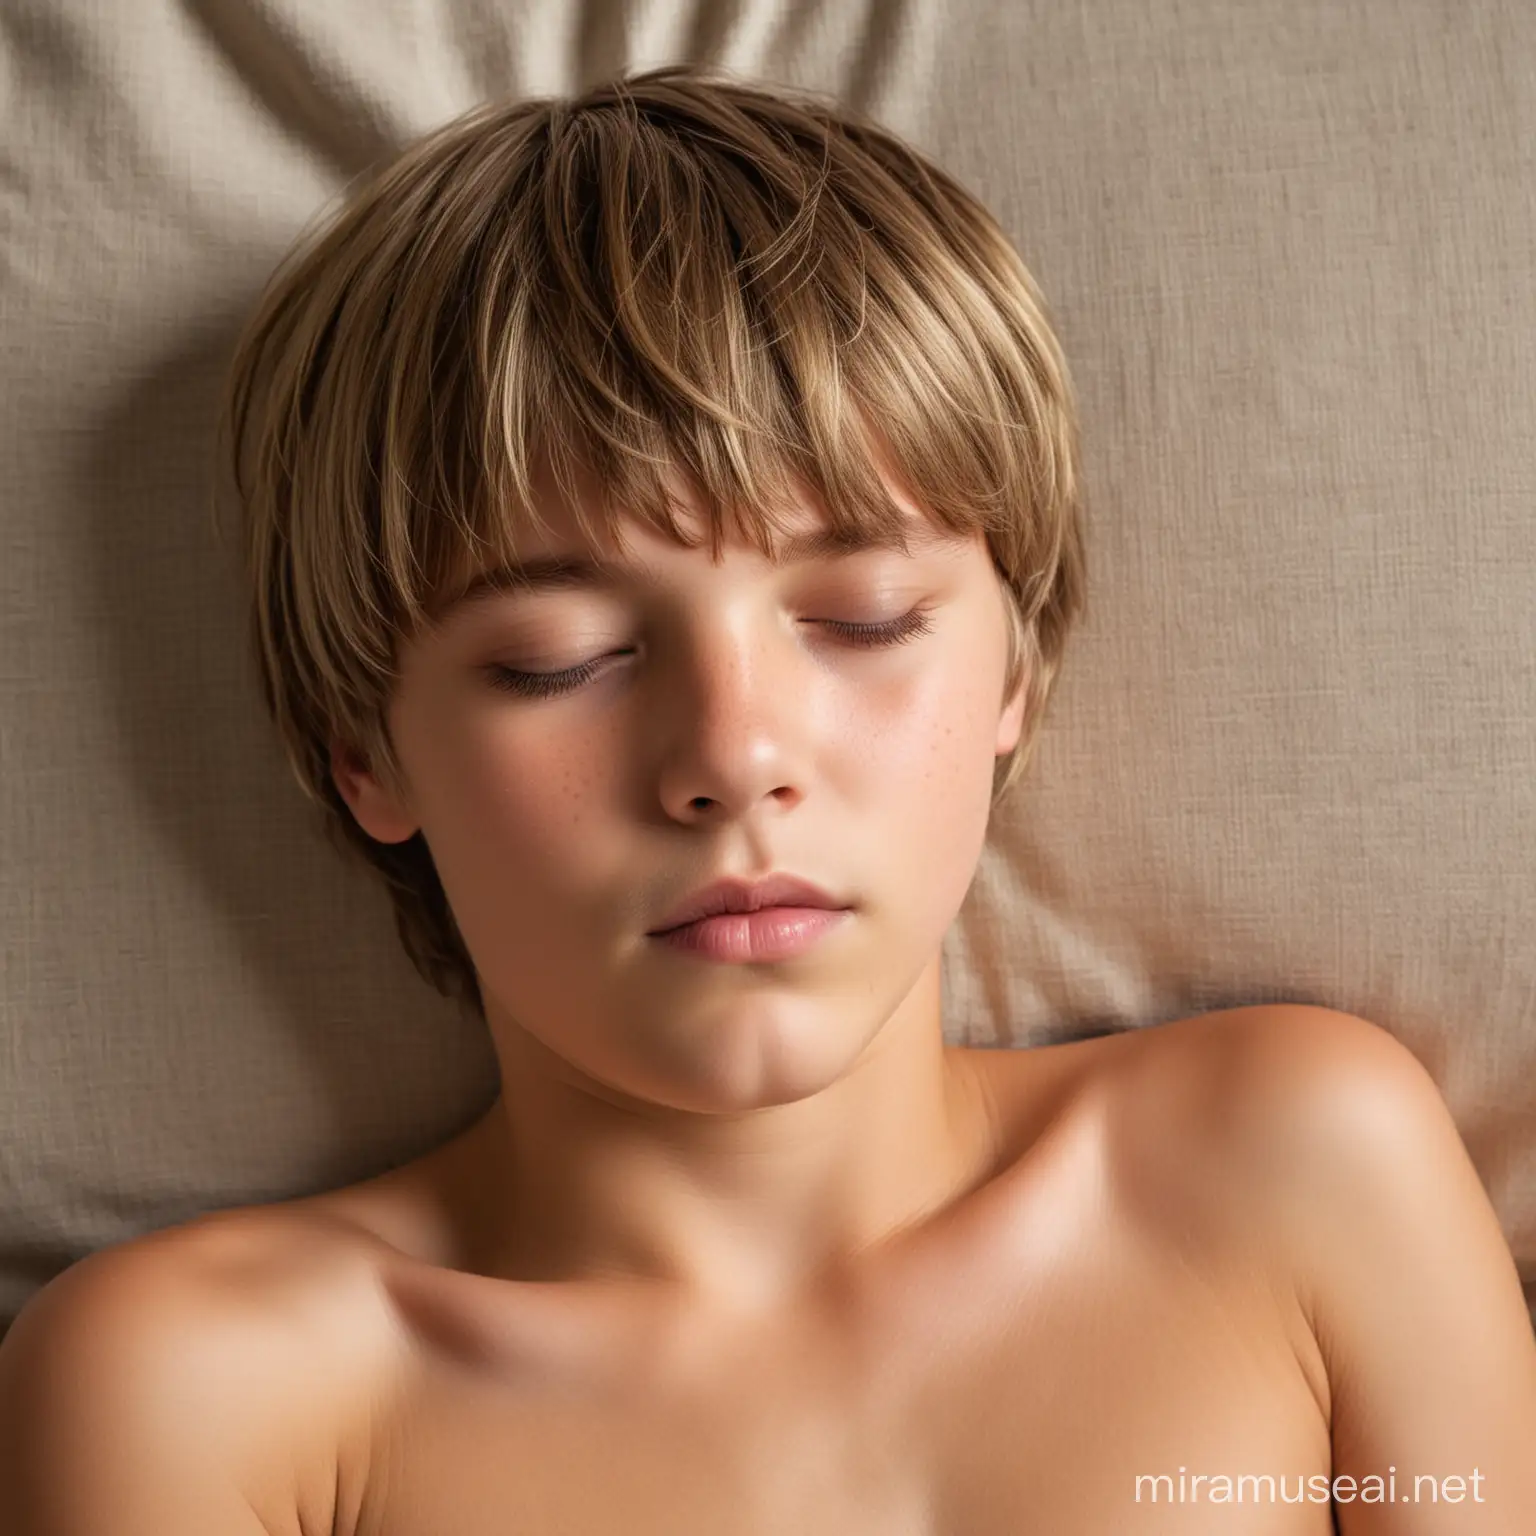 Ten year old sleeping boy, dark blond shiny hair with highlights, bowl cut, lying on side,  soft light overhead, shirtless